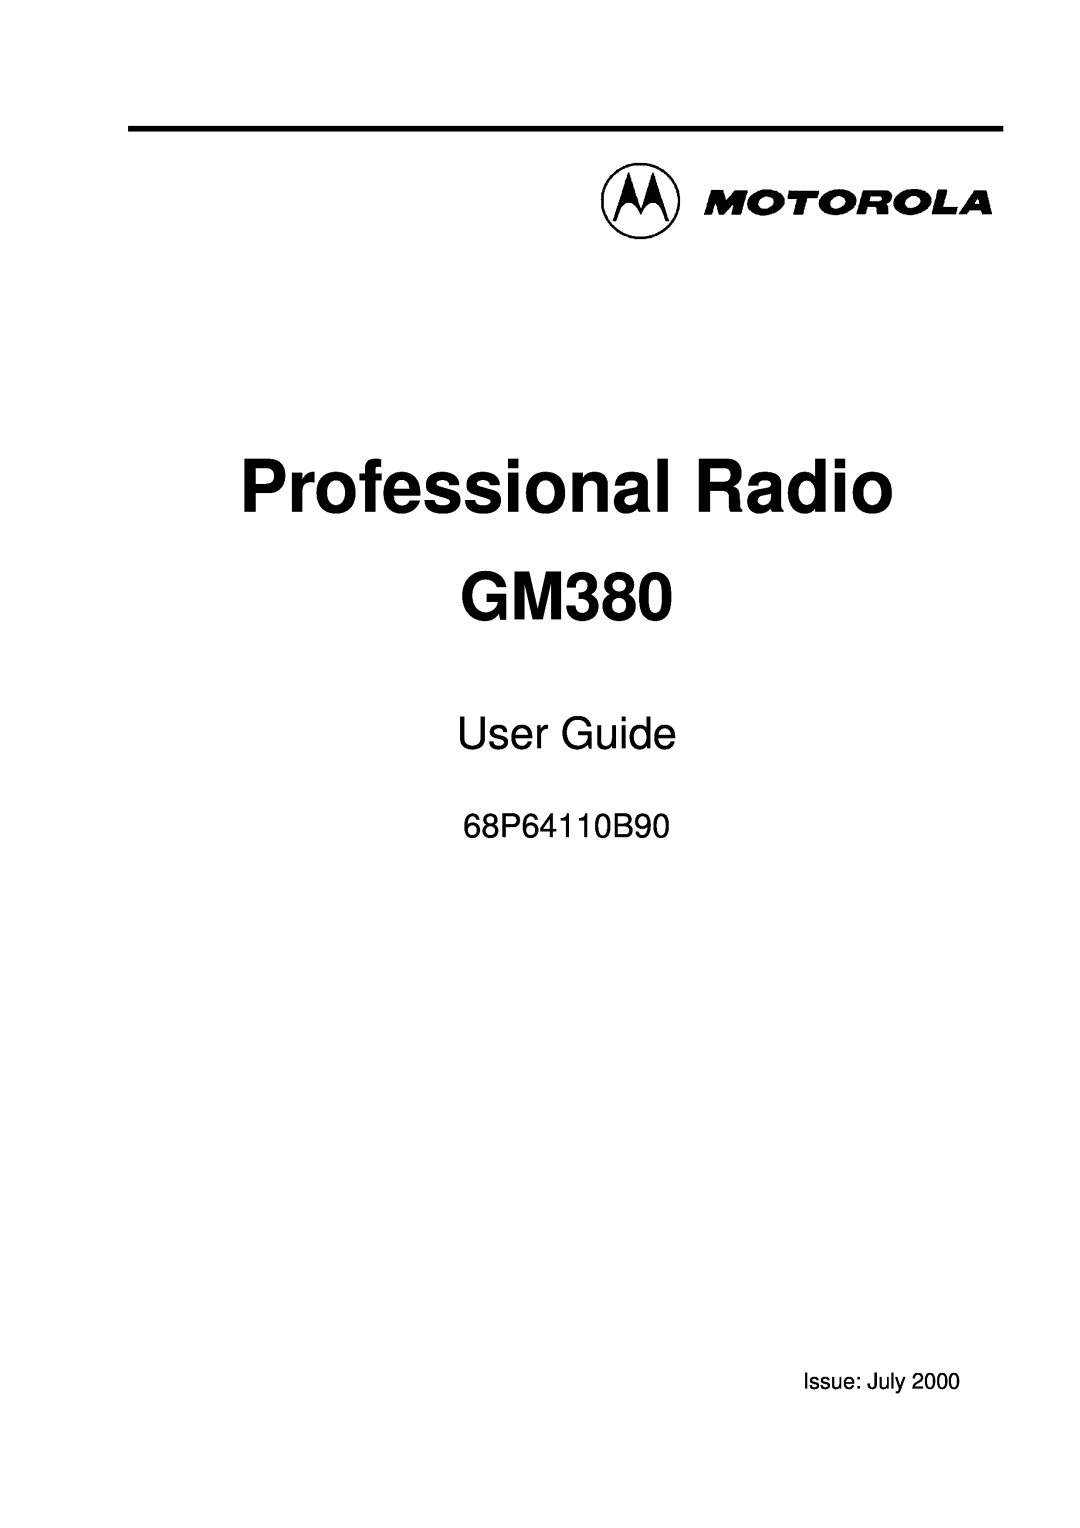 Motorola GM380 manual Professional Radio, User Guide, 68P64110B90, Issue July 